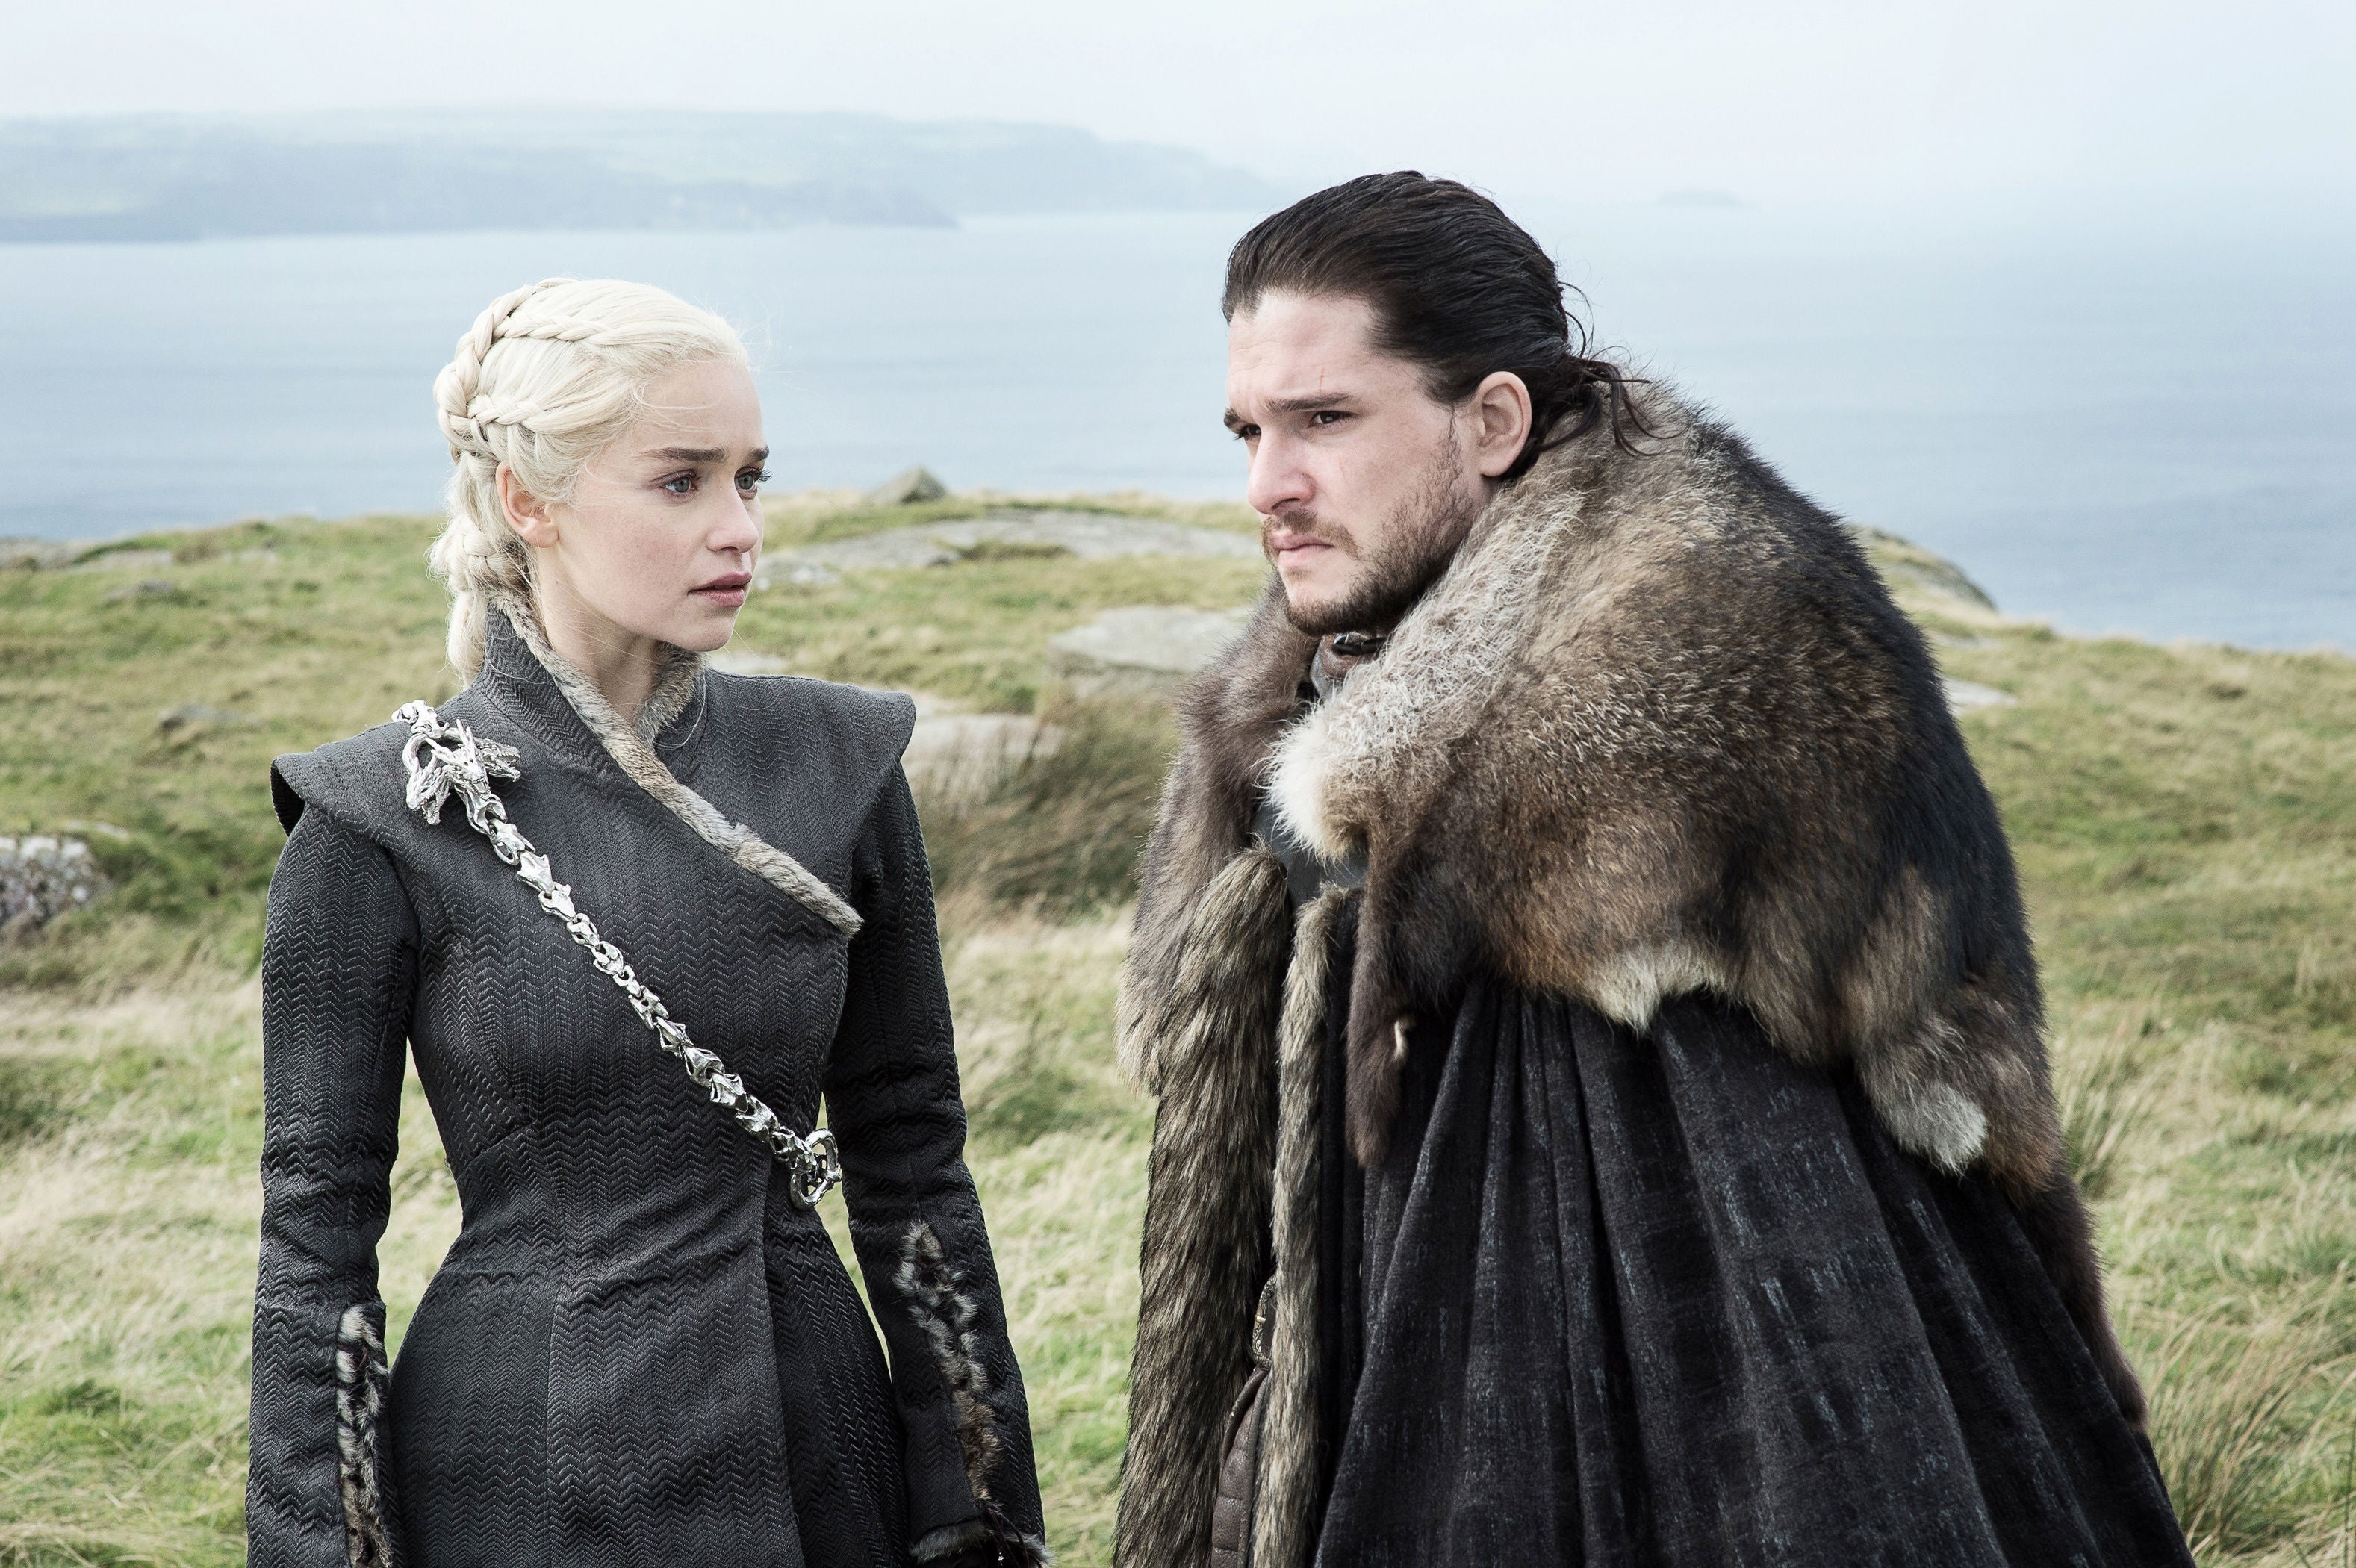 Kit Harington, right, as Jon Snow in Game Of Thrones alongside Emilia Clarke as Daenerys Targaryen (HBO/PA)